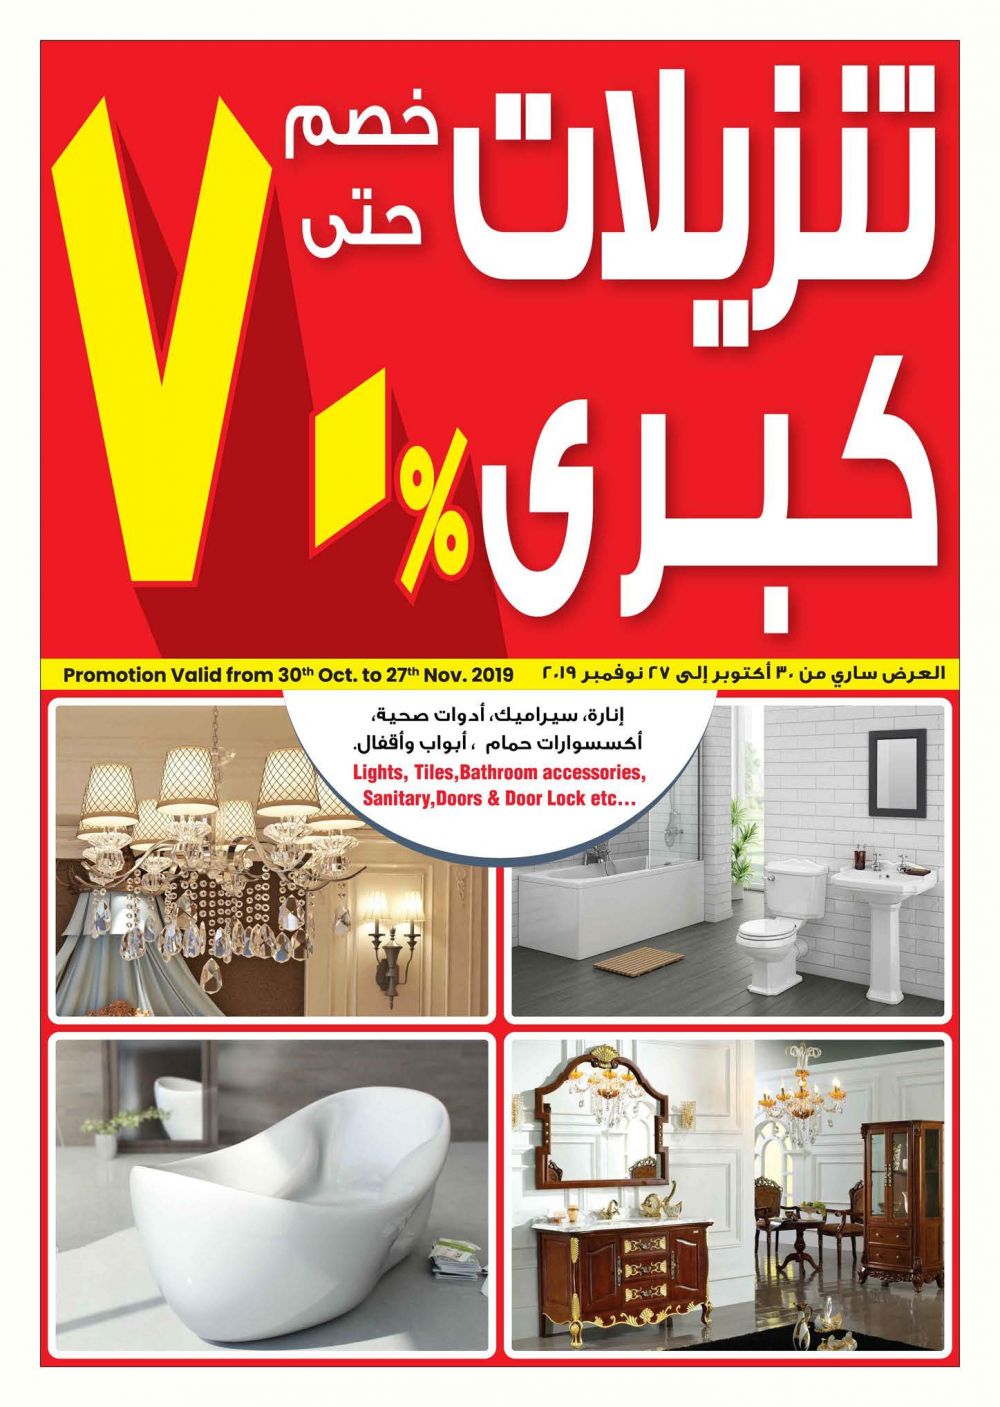 Ansar Gallery Qatar Offers 2019